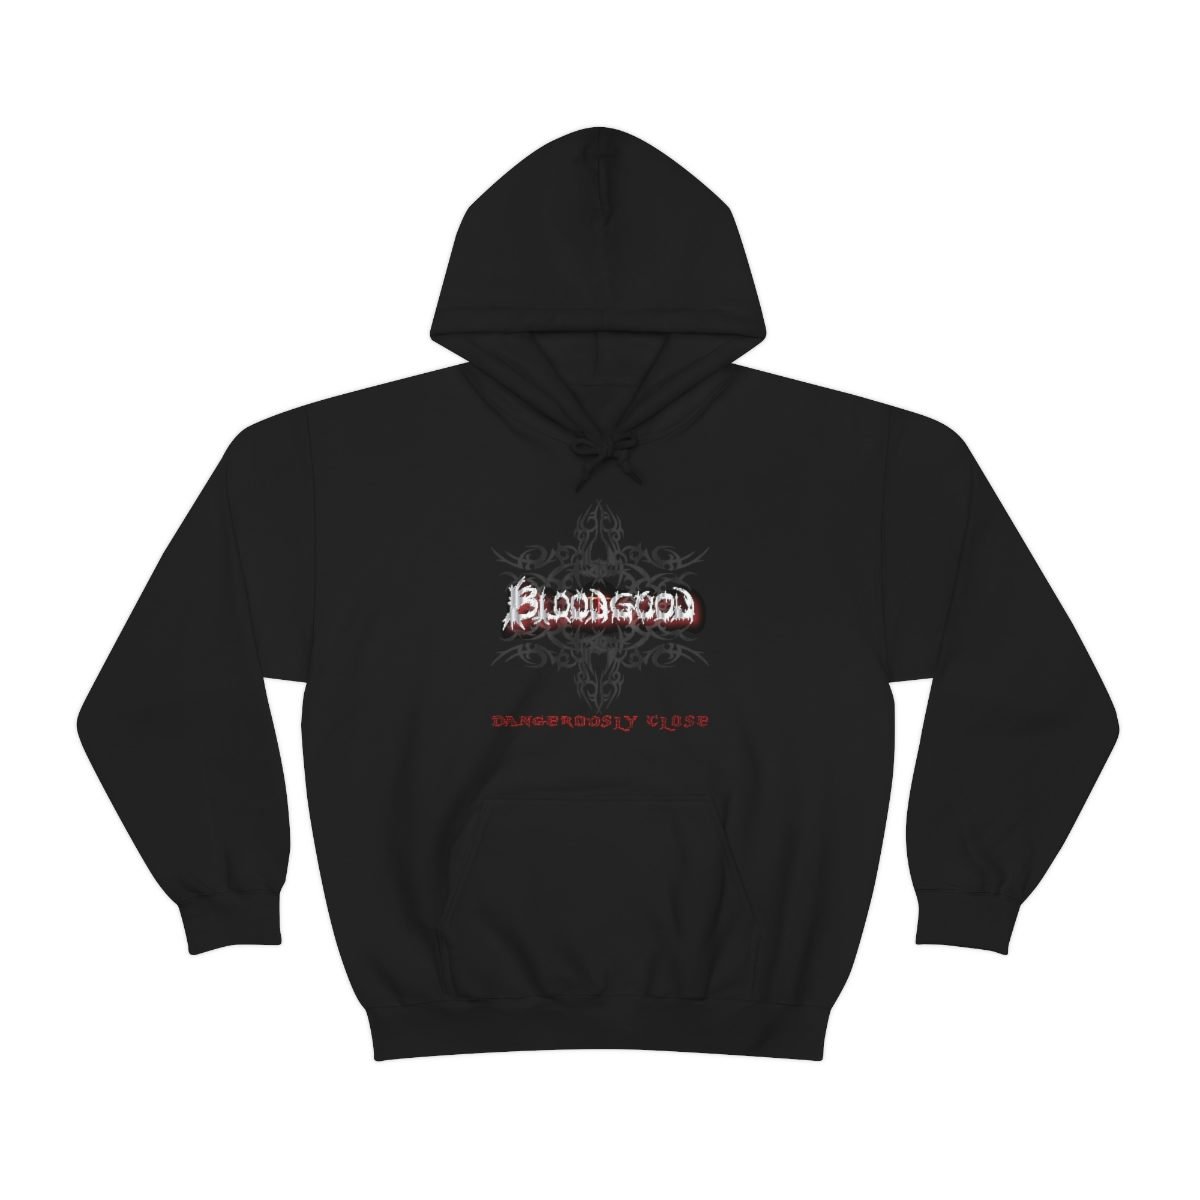 Bloodgood – Dangerously Close Clean Version Pullover Hooded Sweatshirt